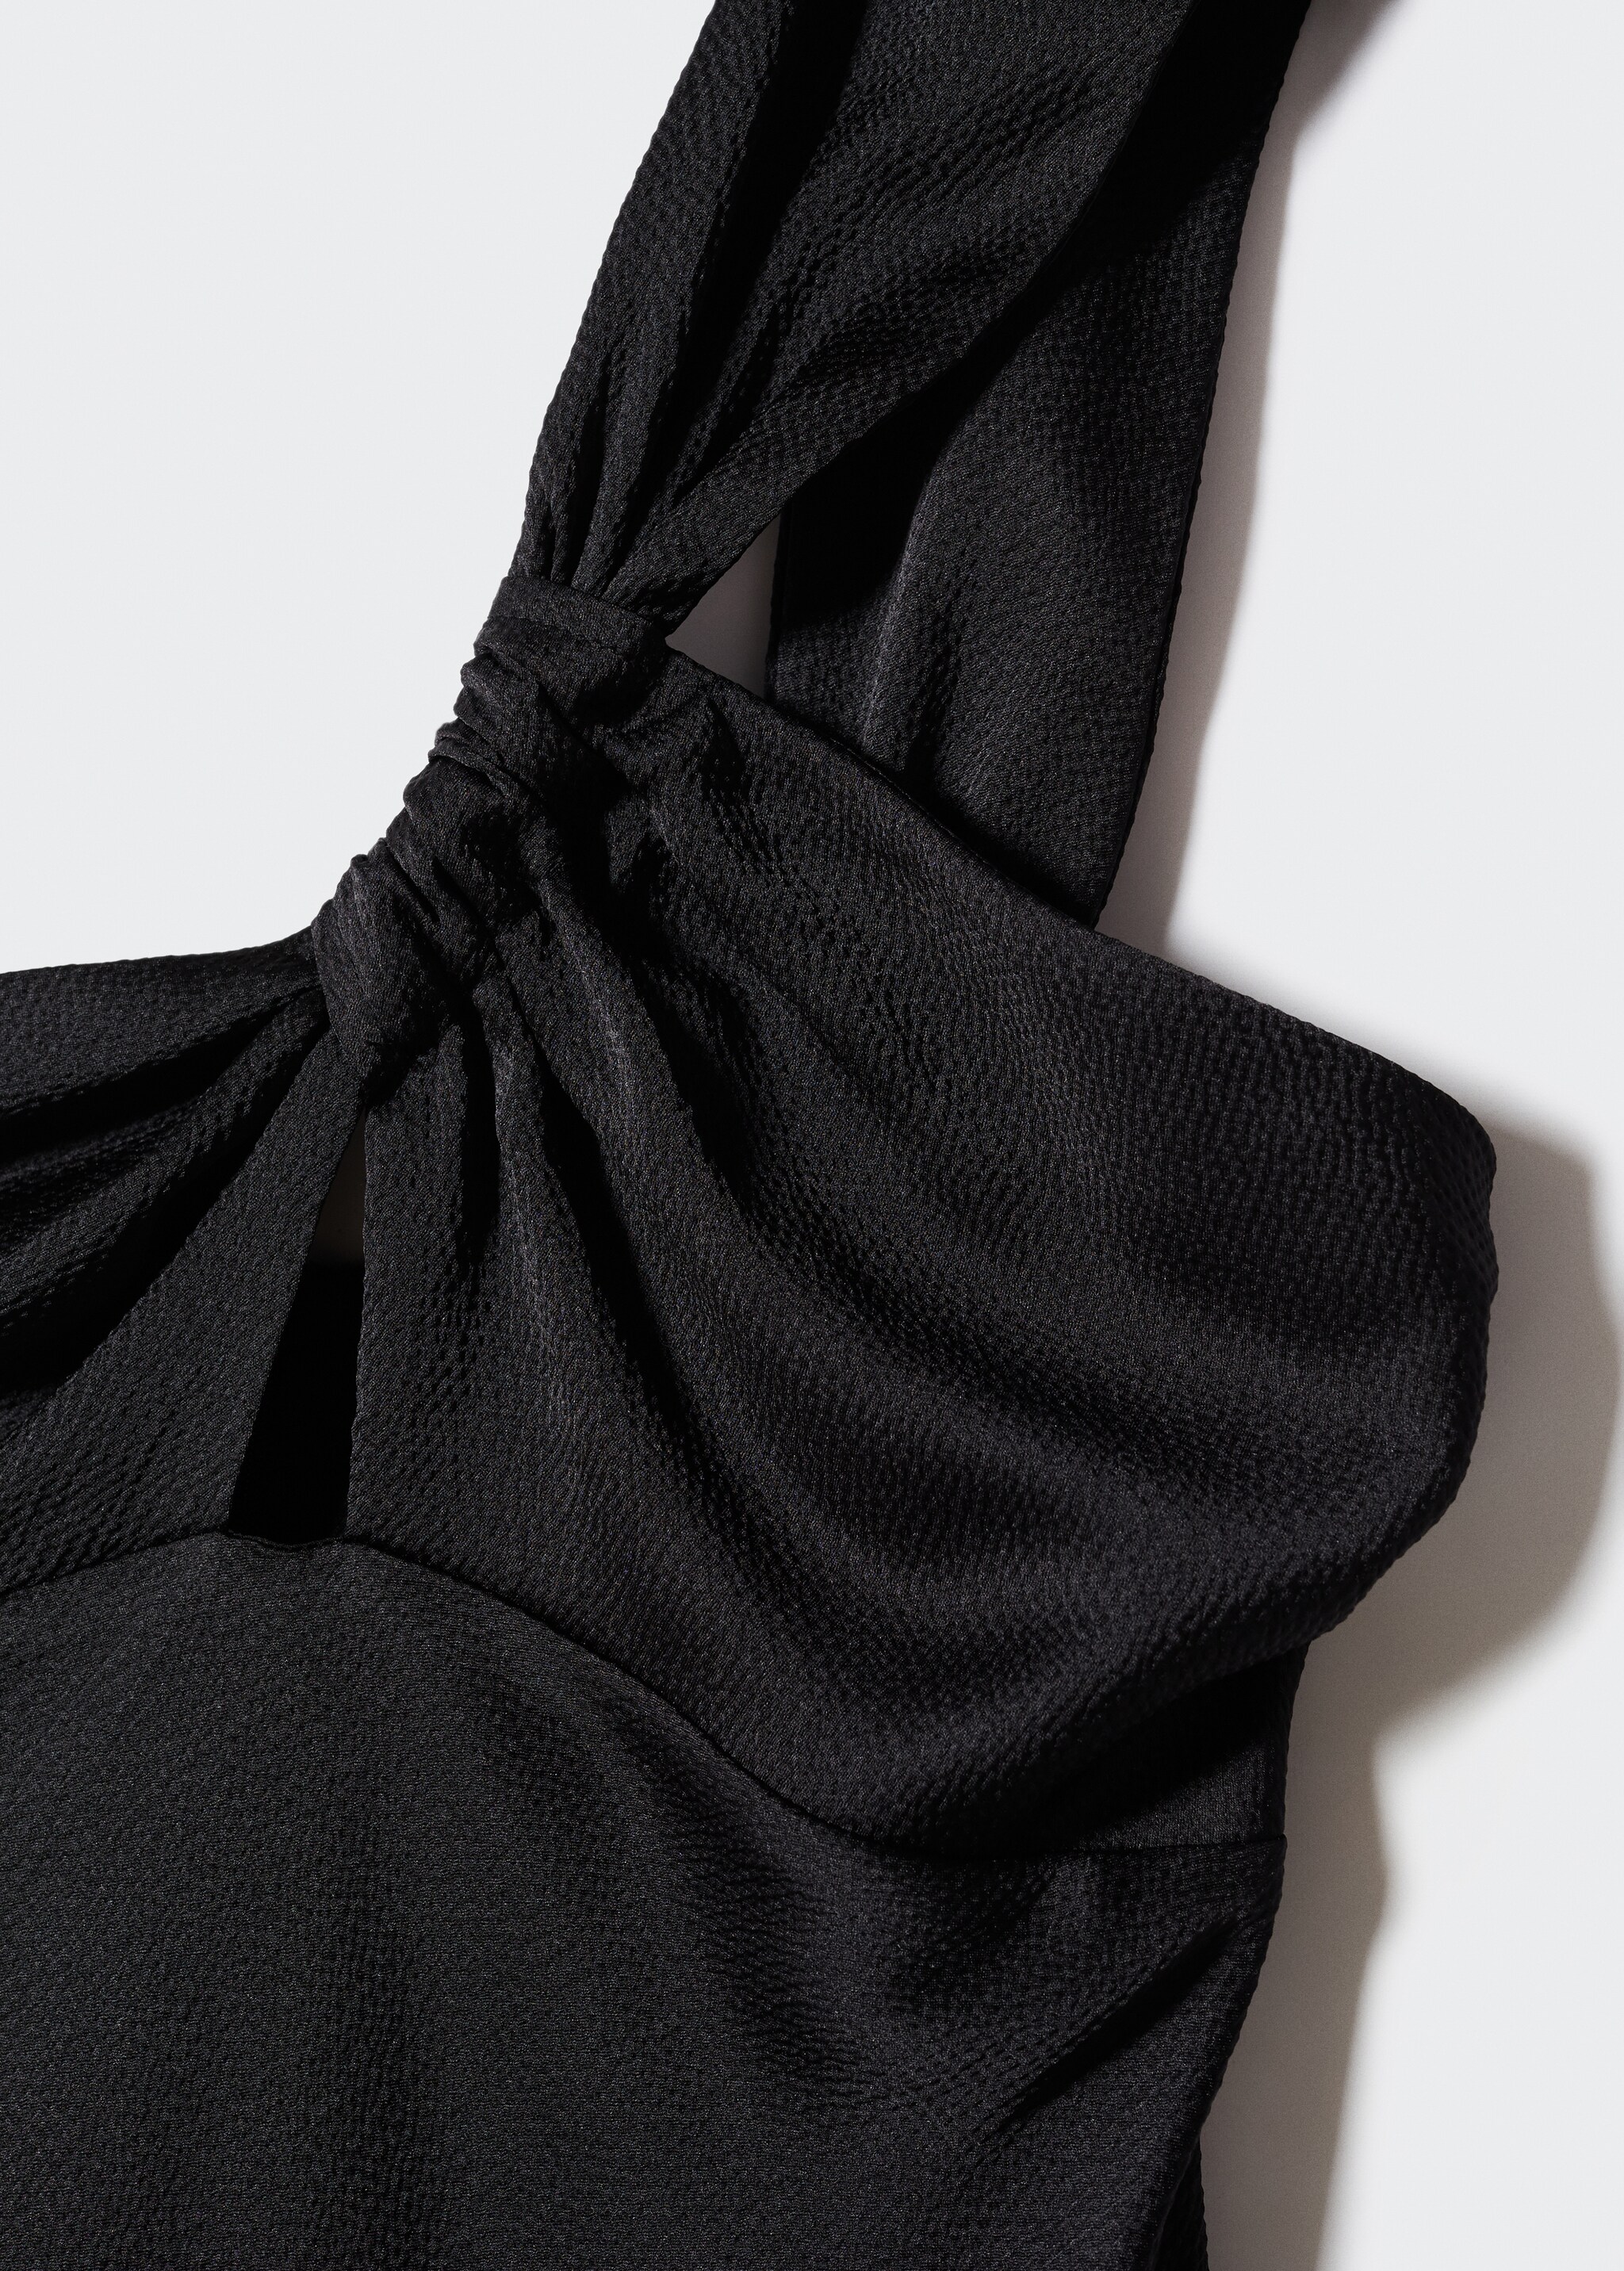 Asymmetrical black satin dress - Details of the article 8